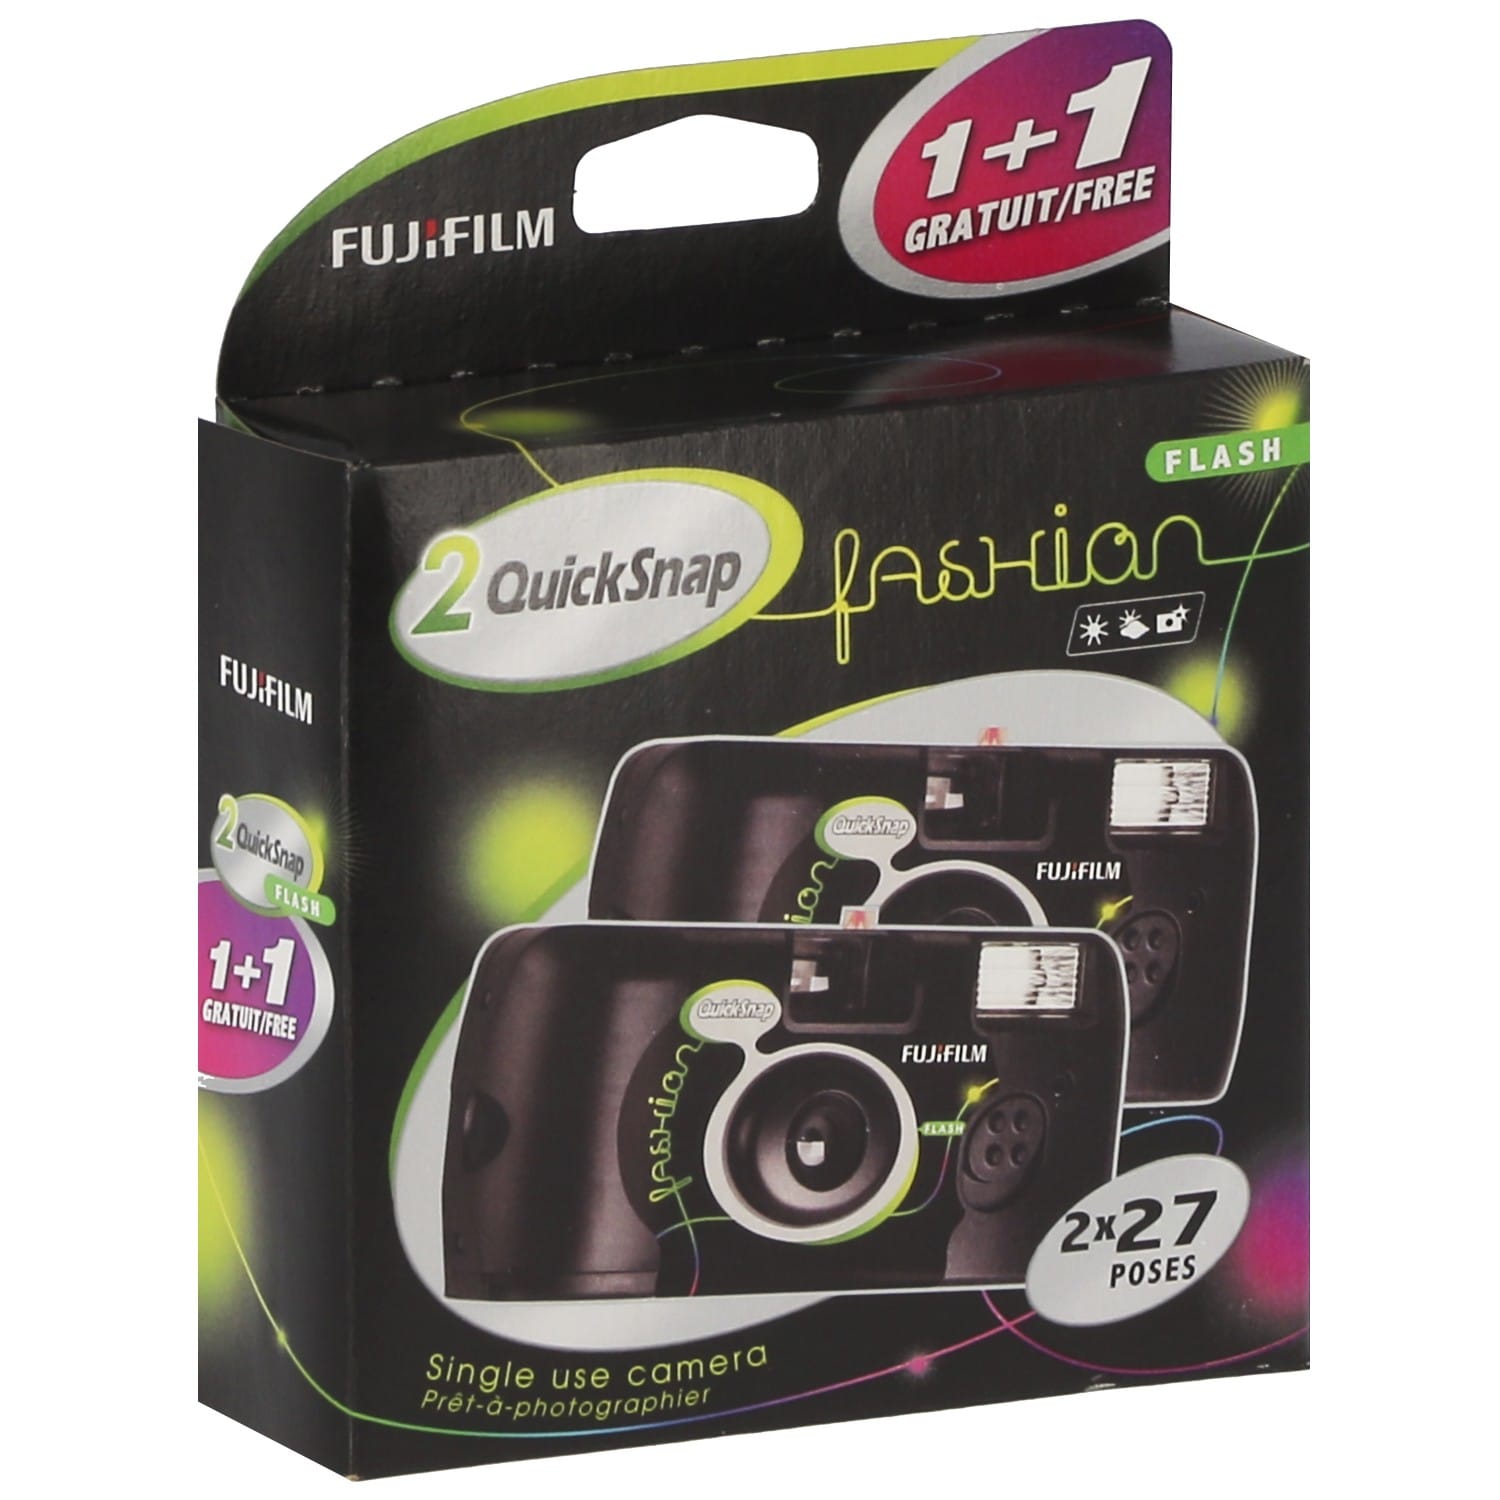 Fujifilm QuickSnap Étanche Caméra Jetable avec Flash - 27 poses